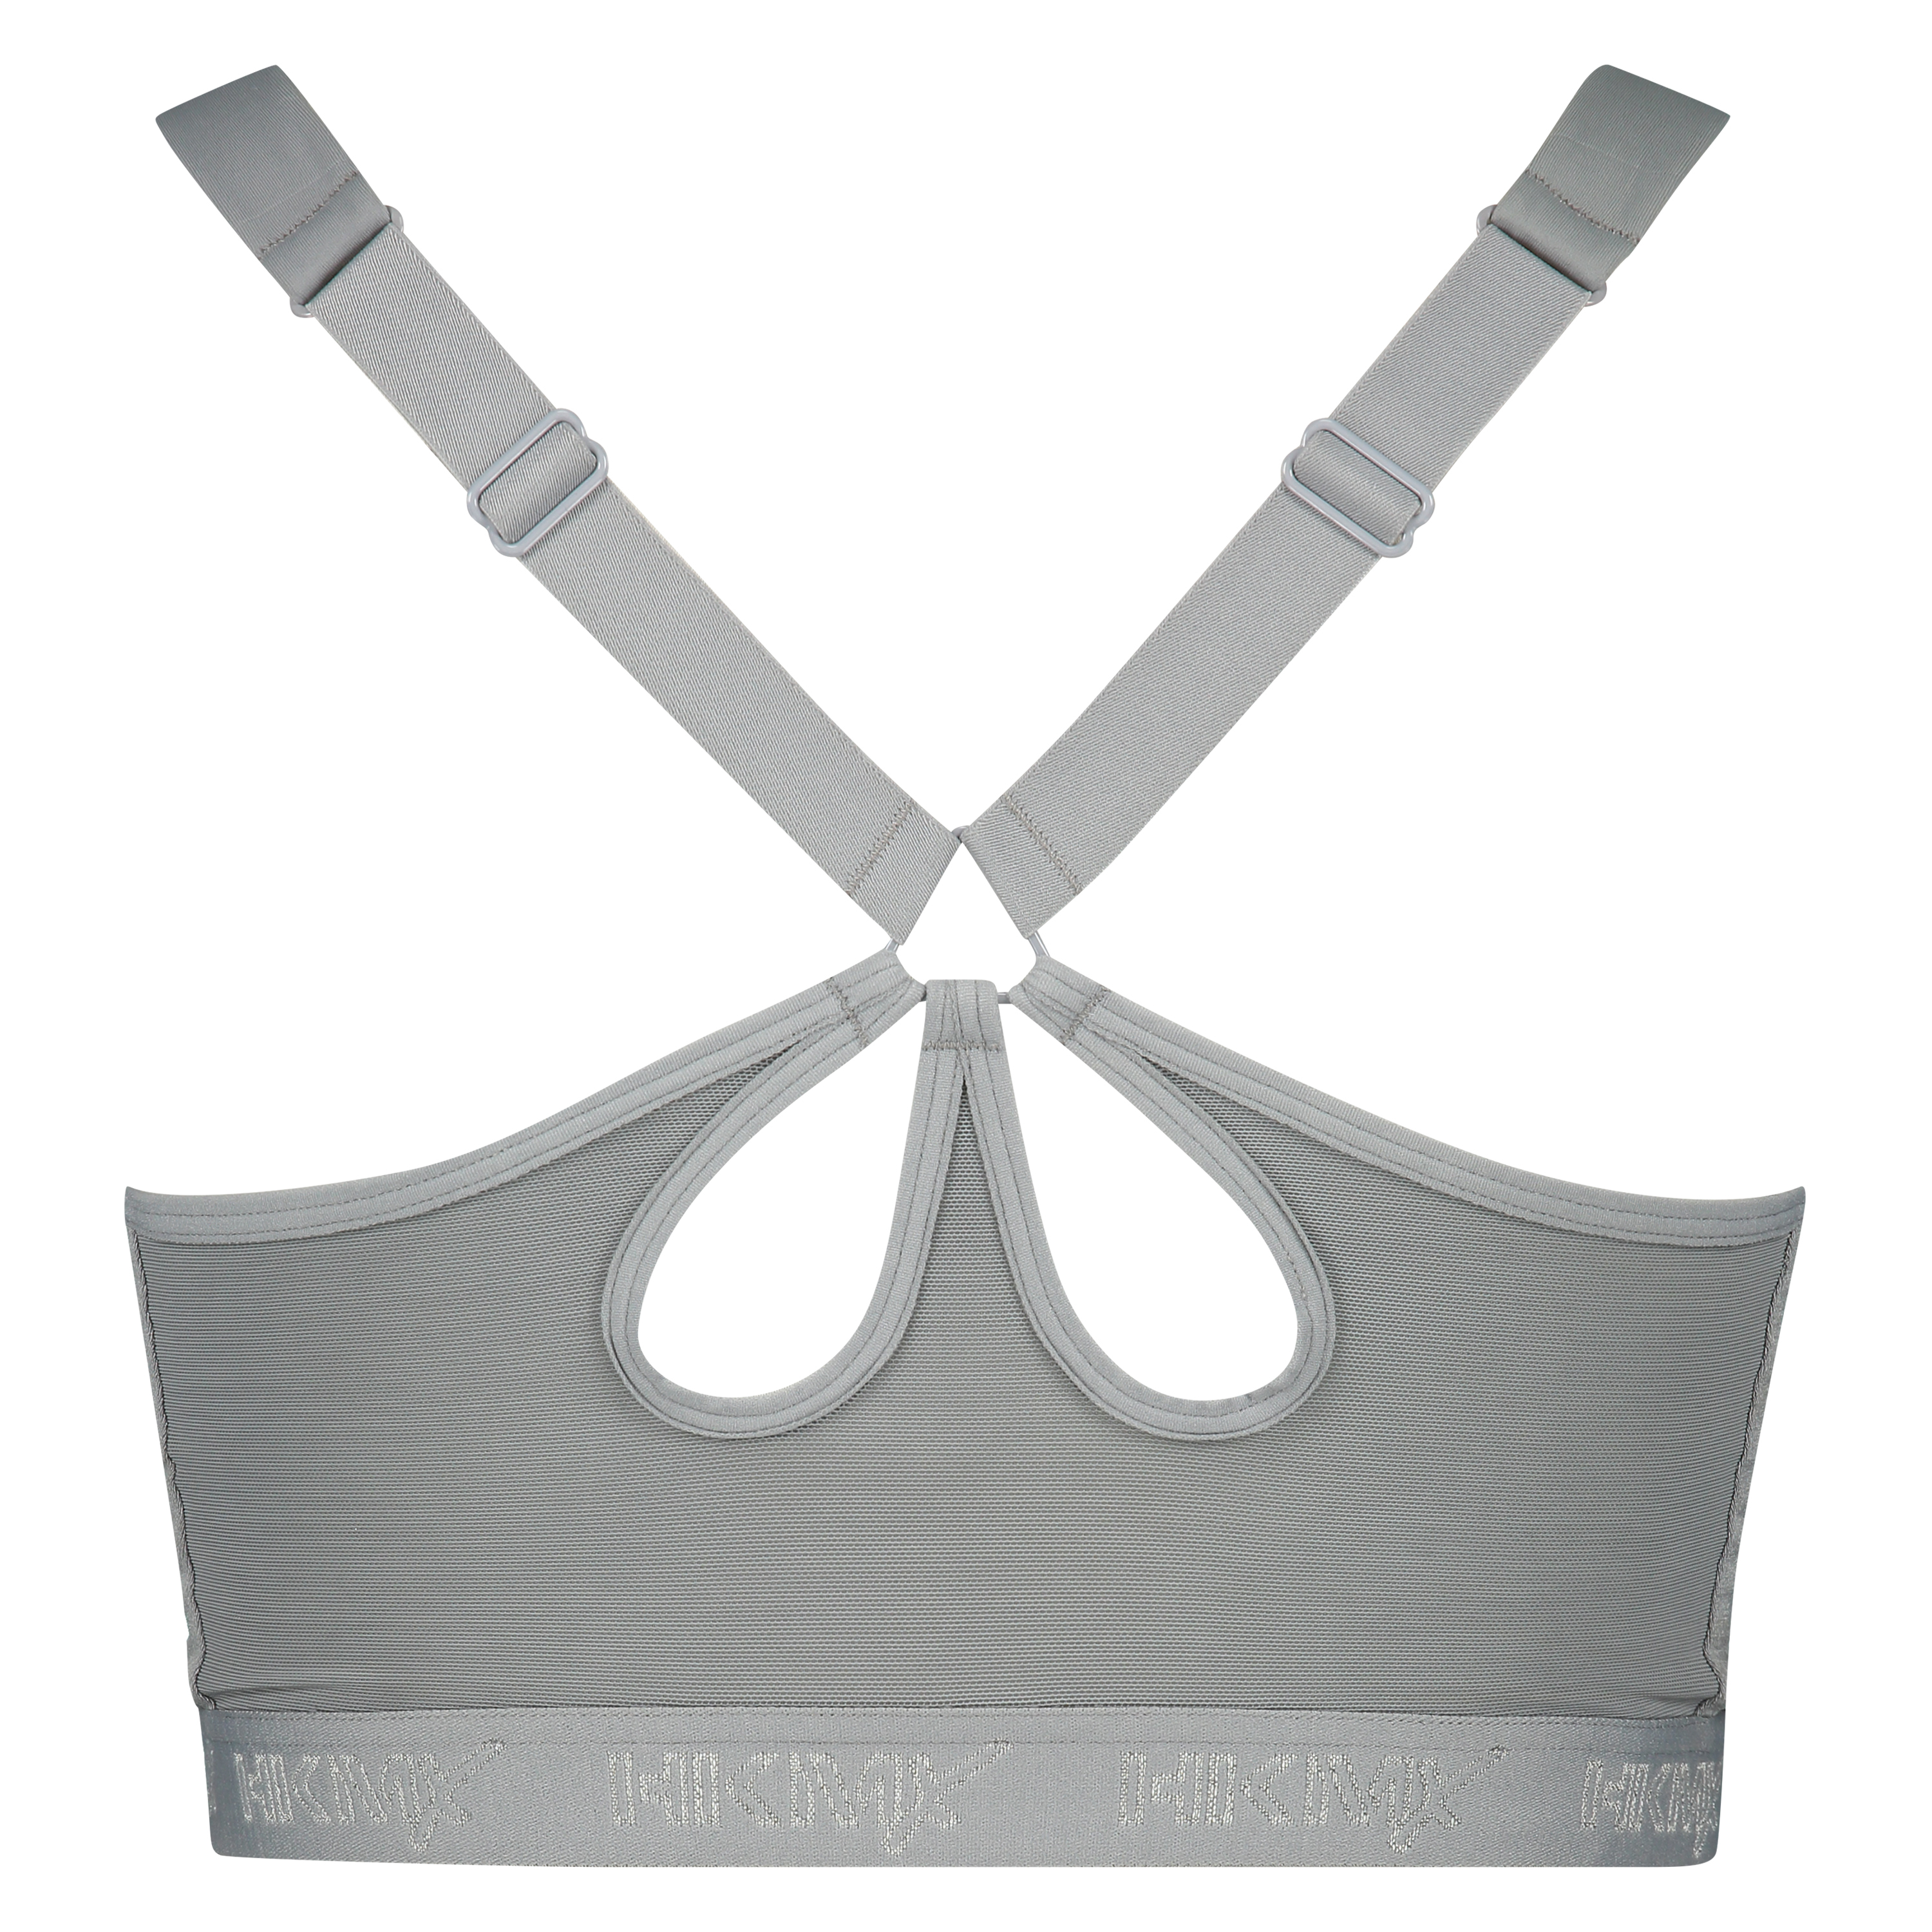 HKMX Sports bra The Pro Level 3, Grey, main